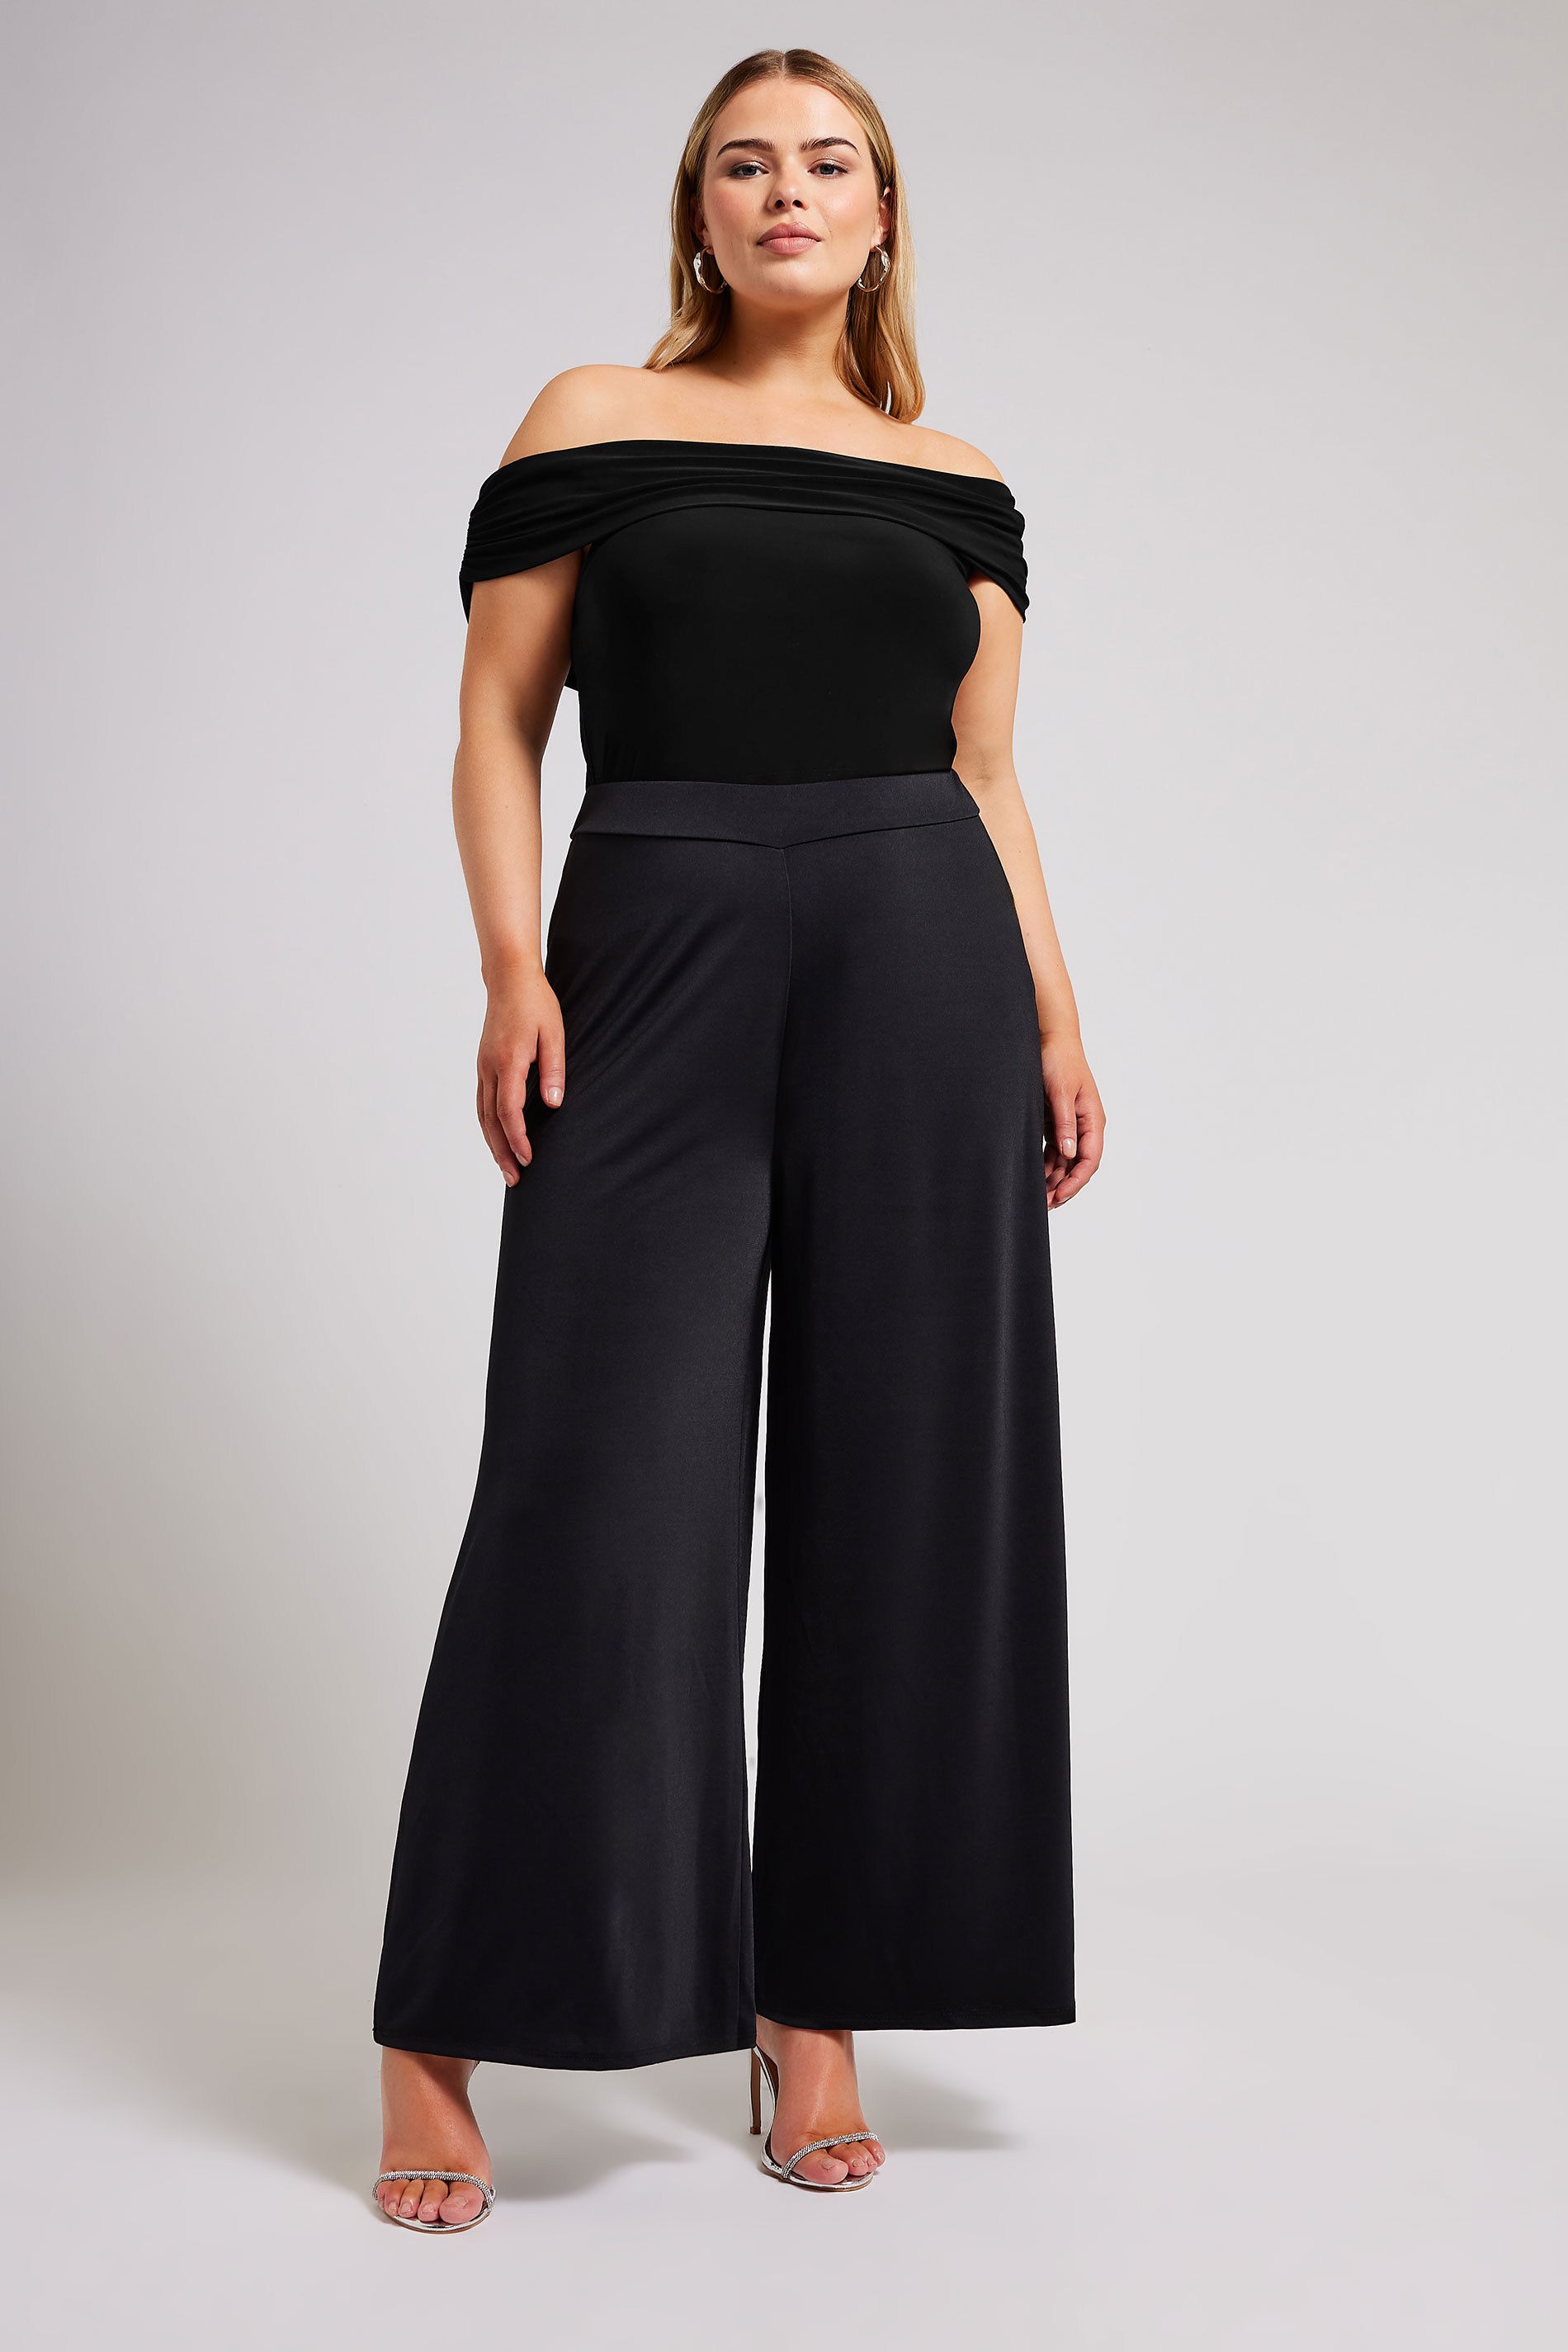 YOURS LONDON Plus Size Black Ruched Bardot Bodysuit | Yours Clothign 2